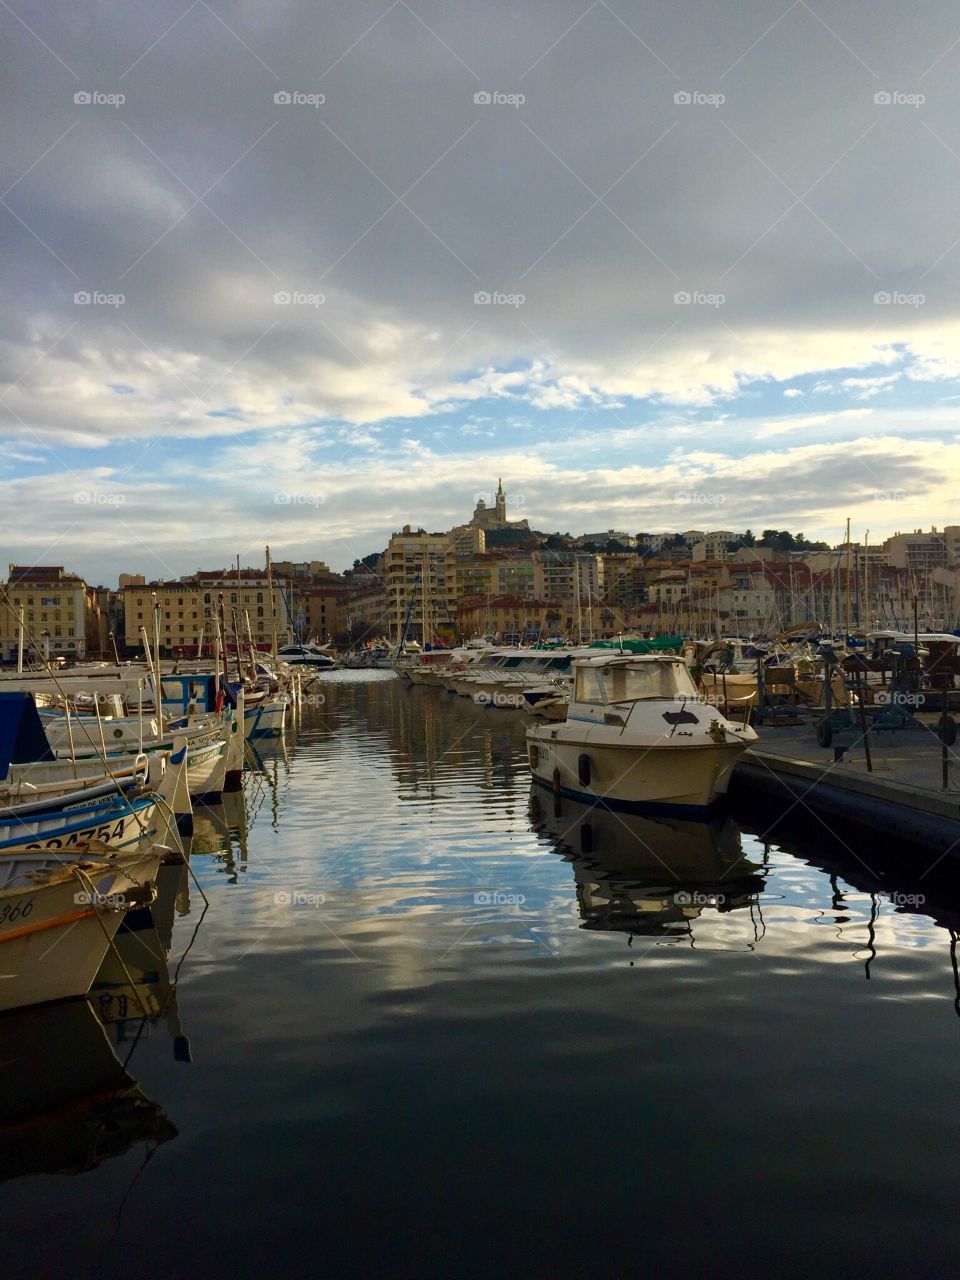 #marseille #le vieux port #provence #france #city #port #street #people #travel 